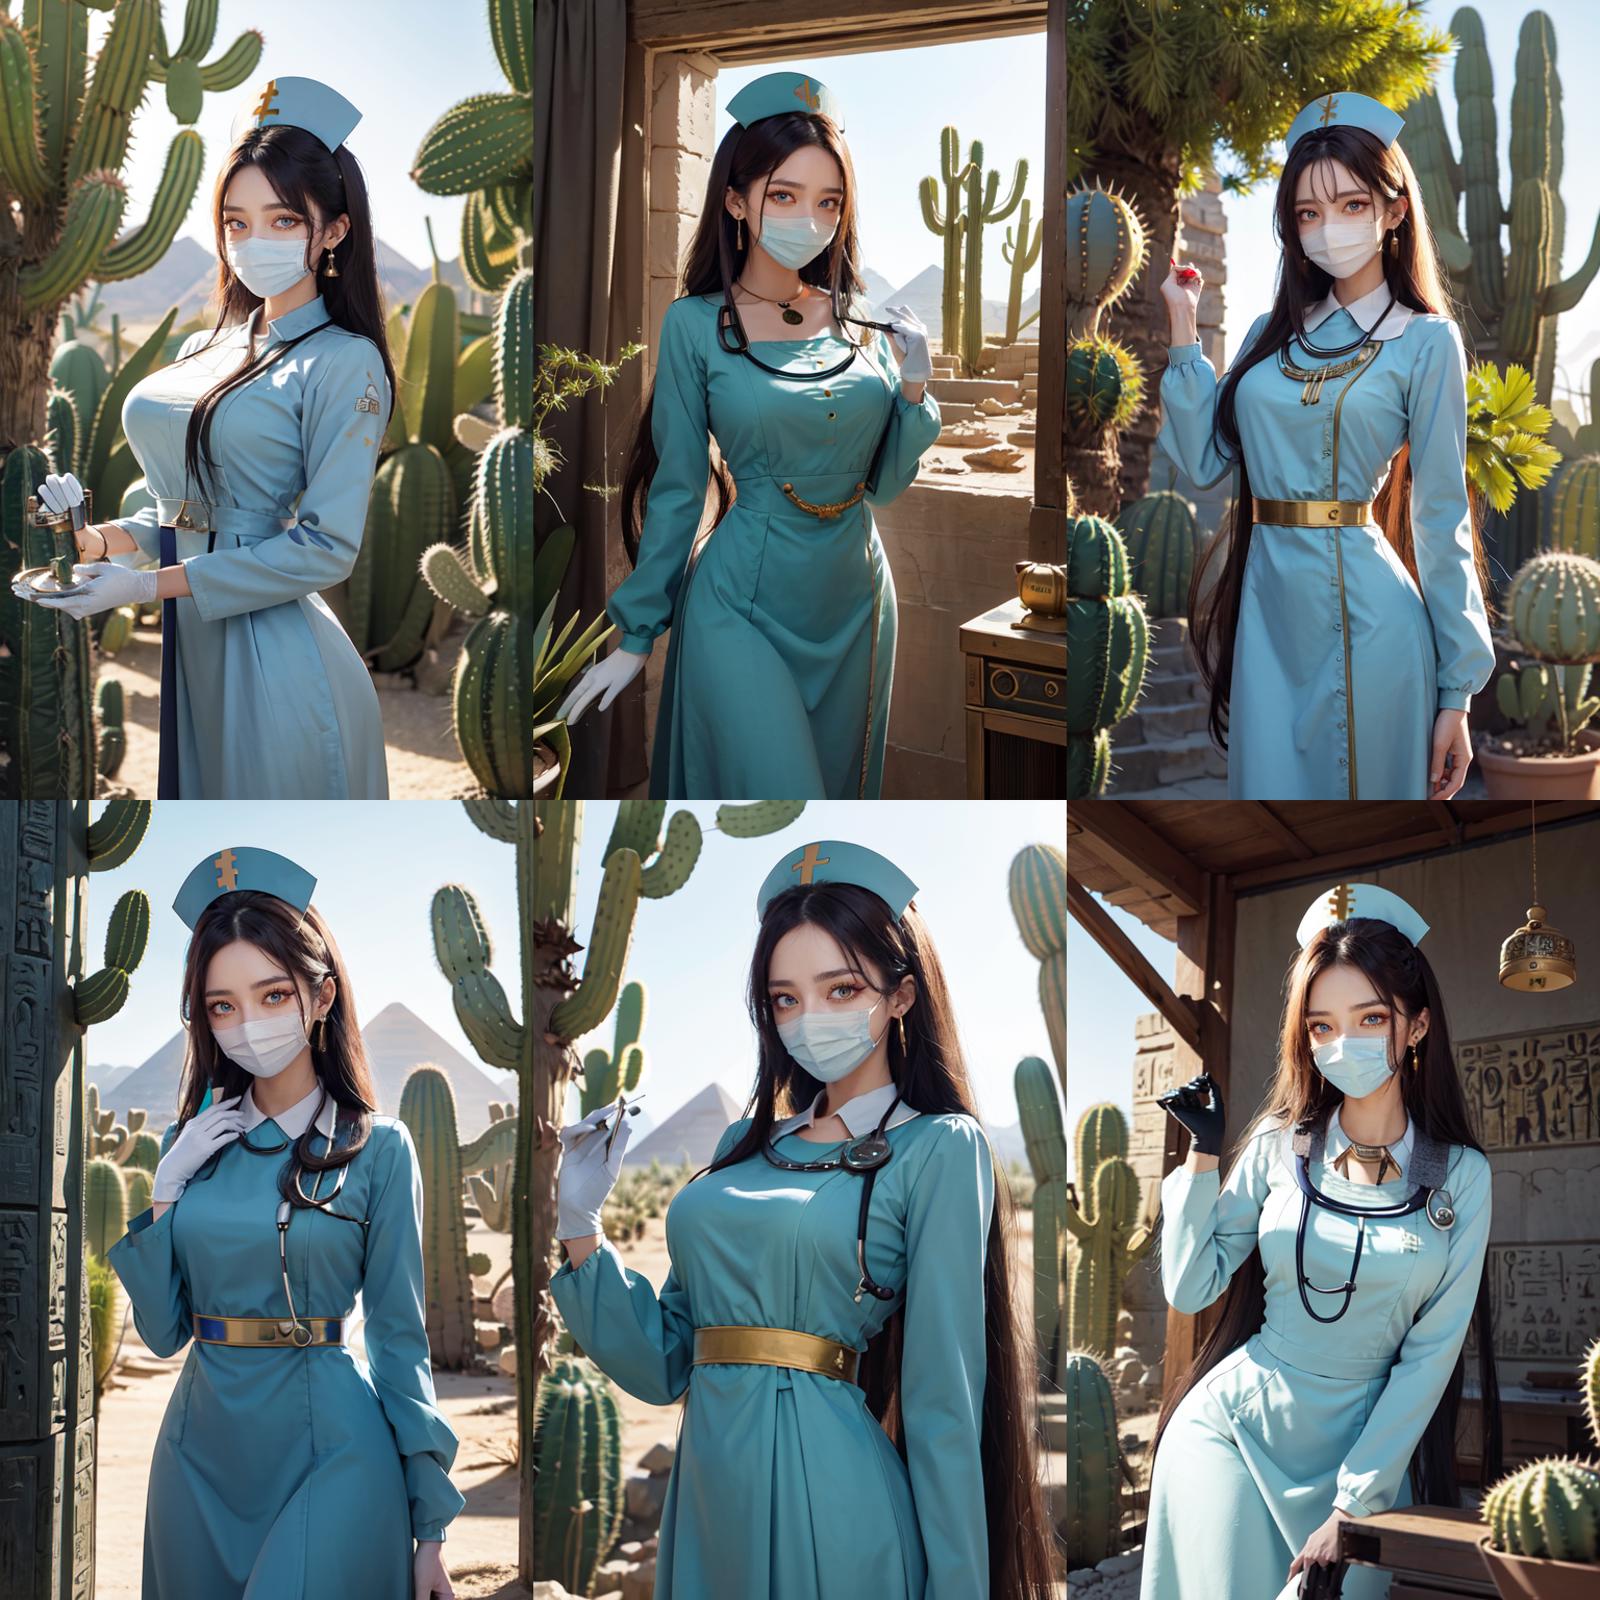 Long Nurse Dress, Type 2 image by bluelovers